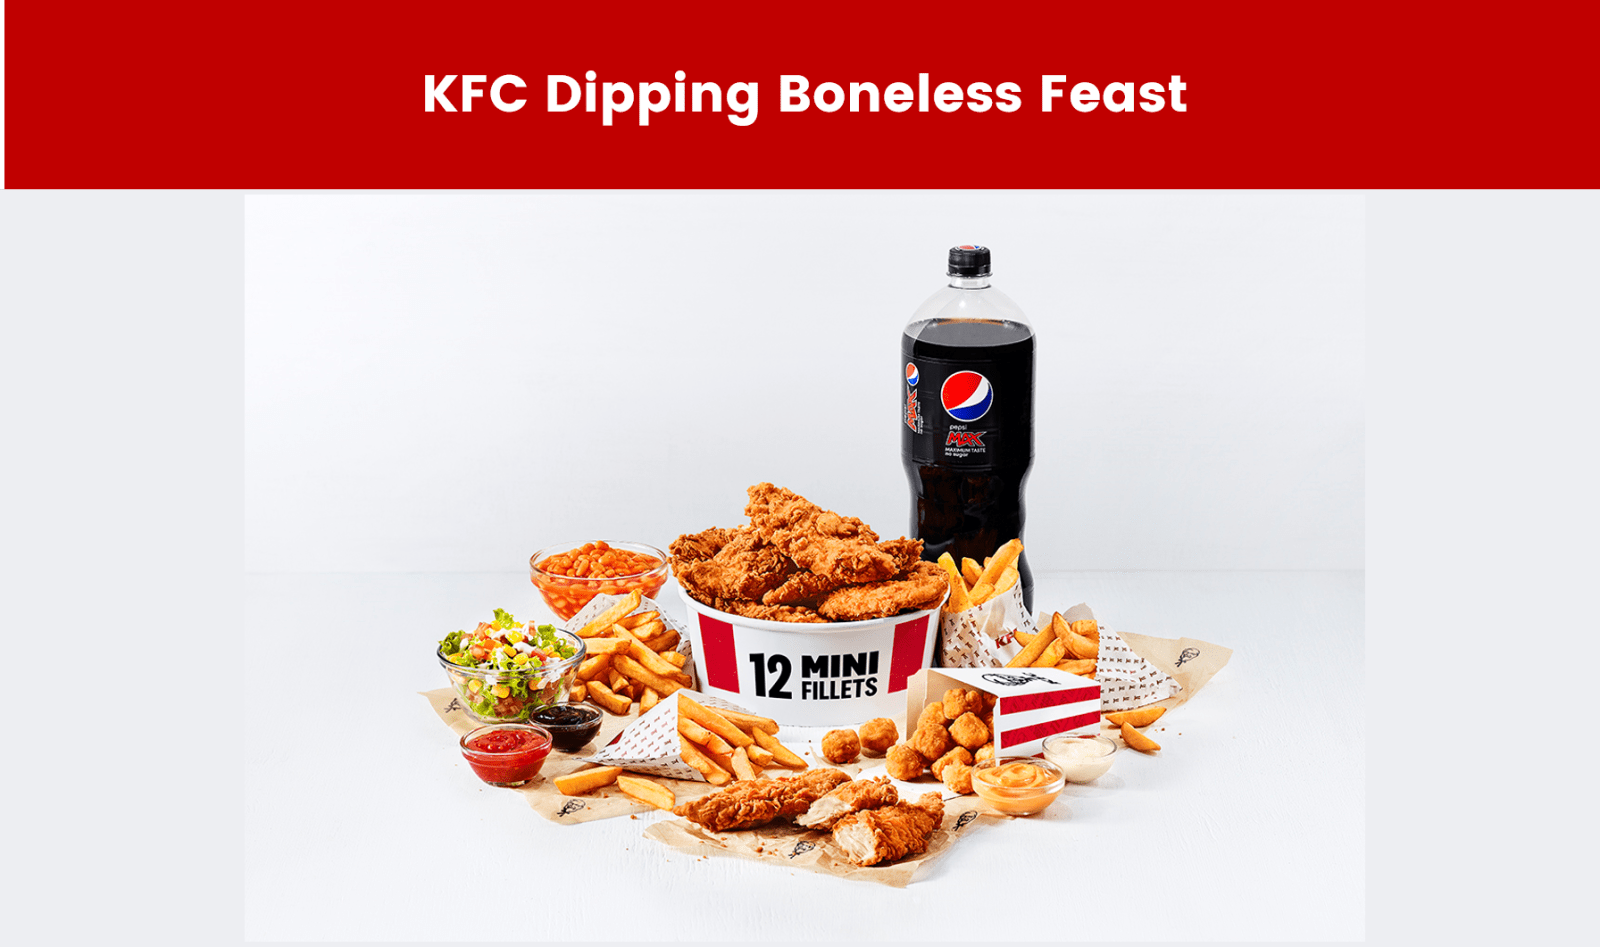 KFC Dipping Boneless Feast
